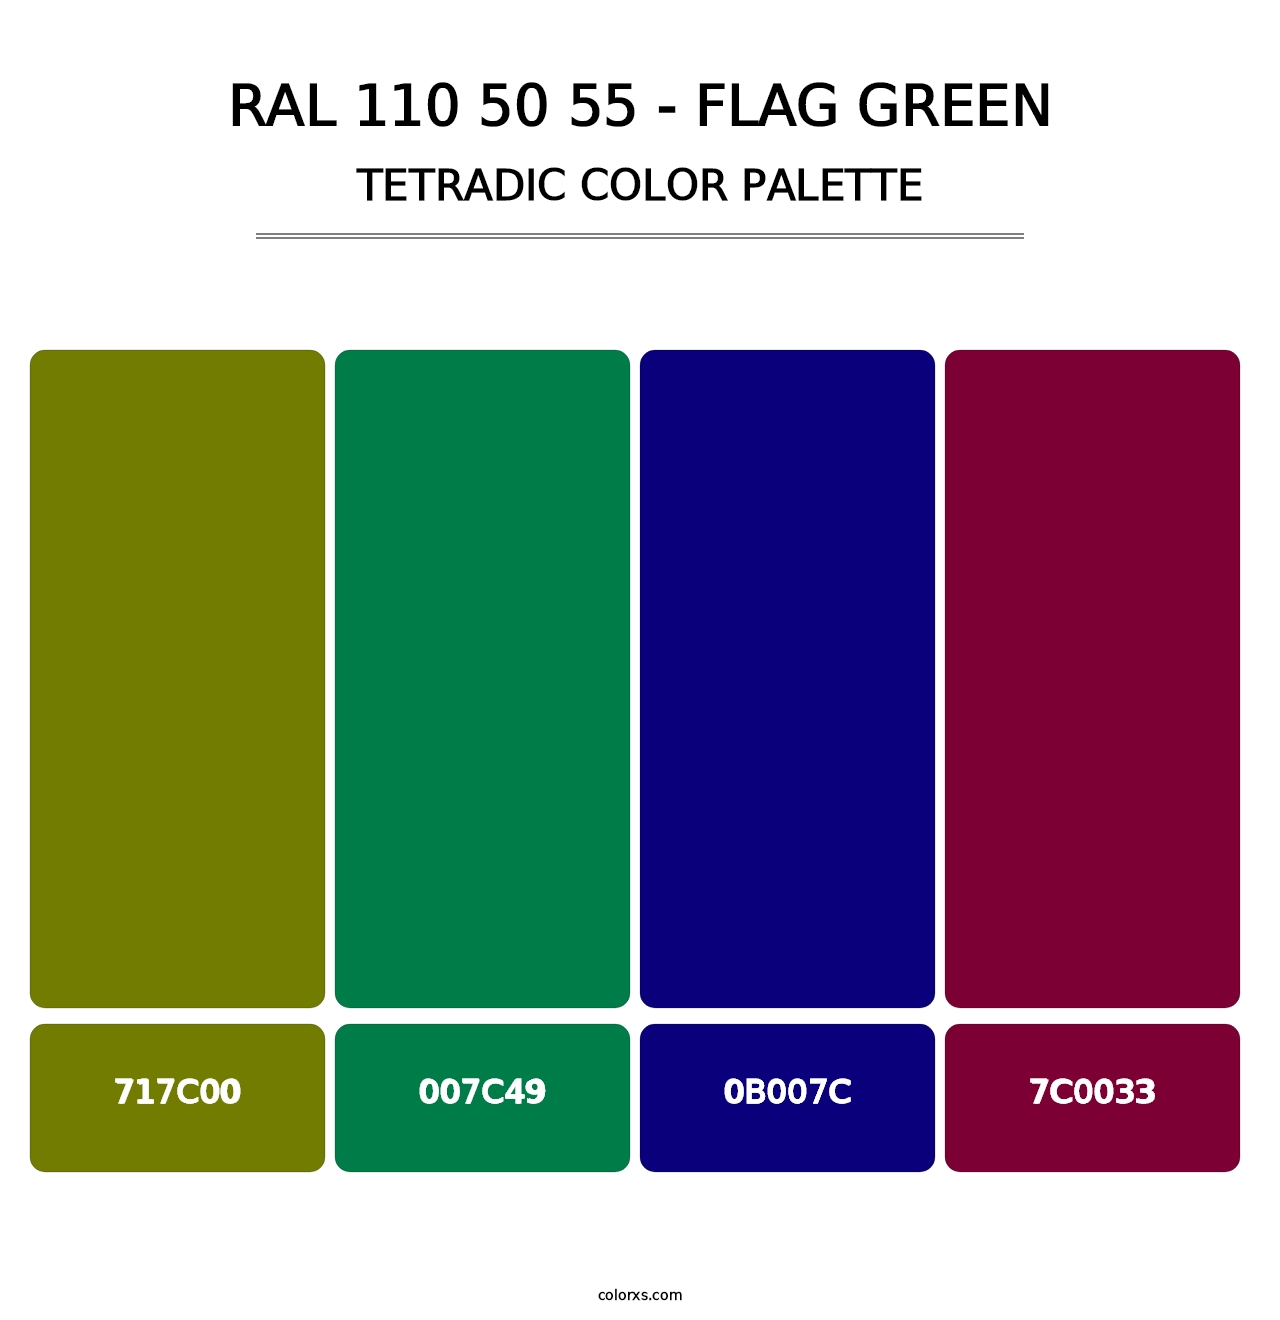 RAL 110 50 55 - Flag Green - Tetradic Color Palette